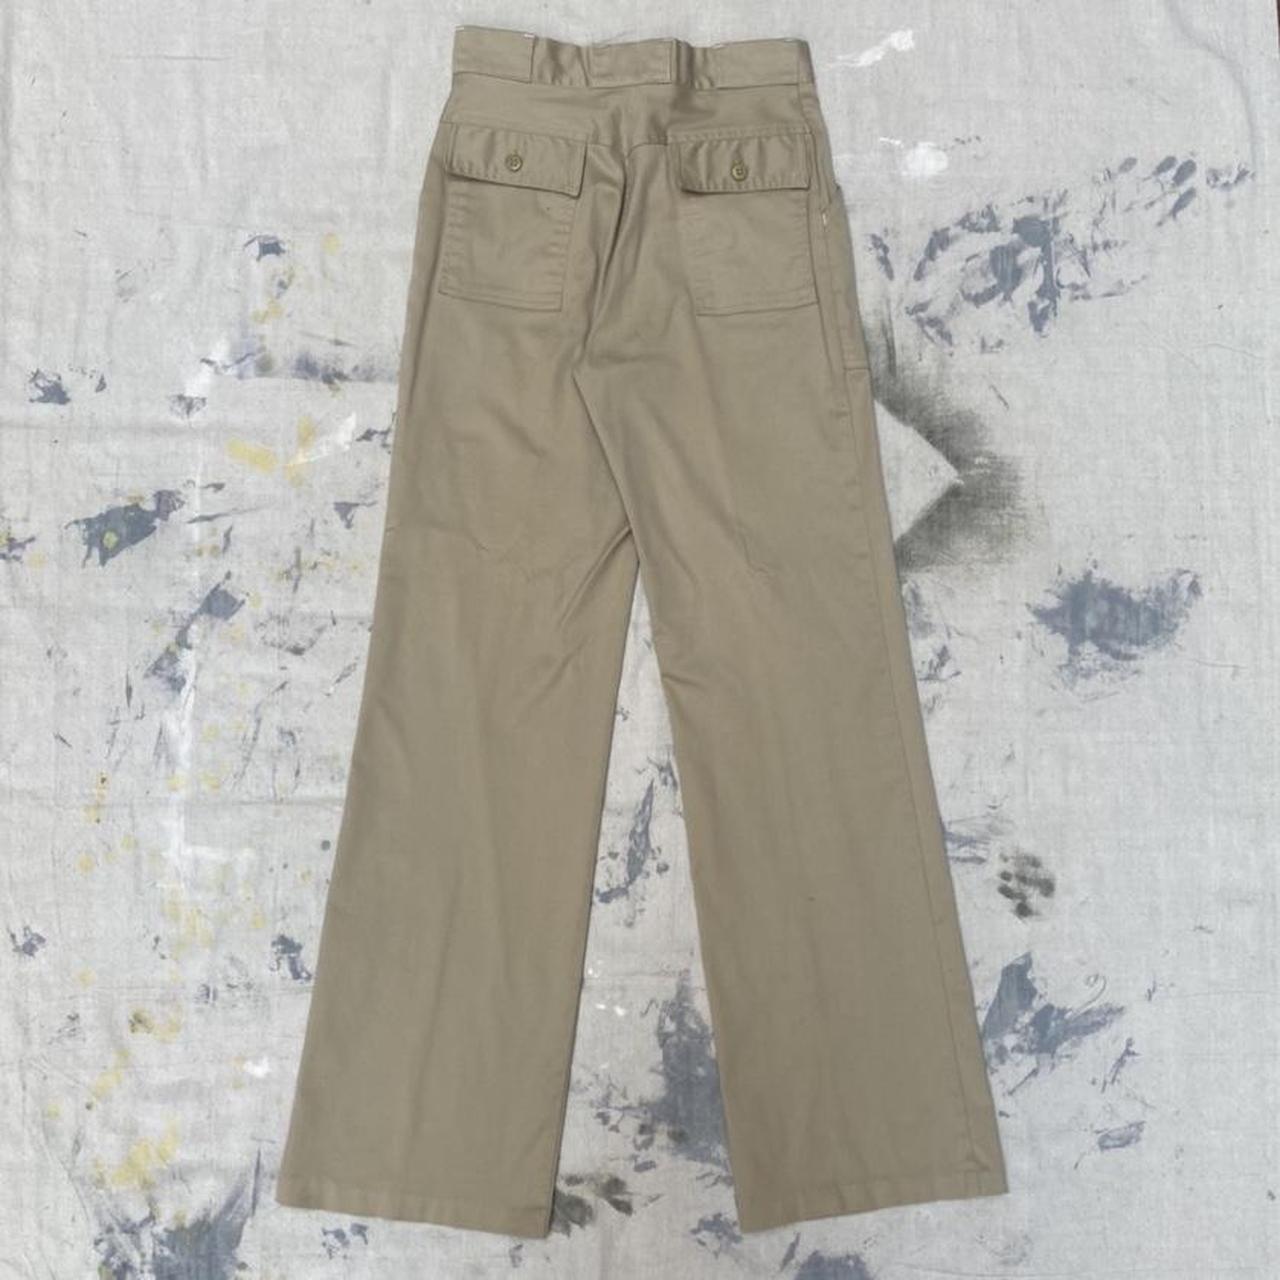 vintage 70s khaki bush pants unisex, really... - Depop